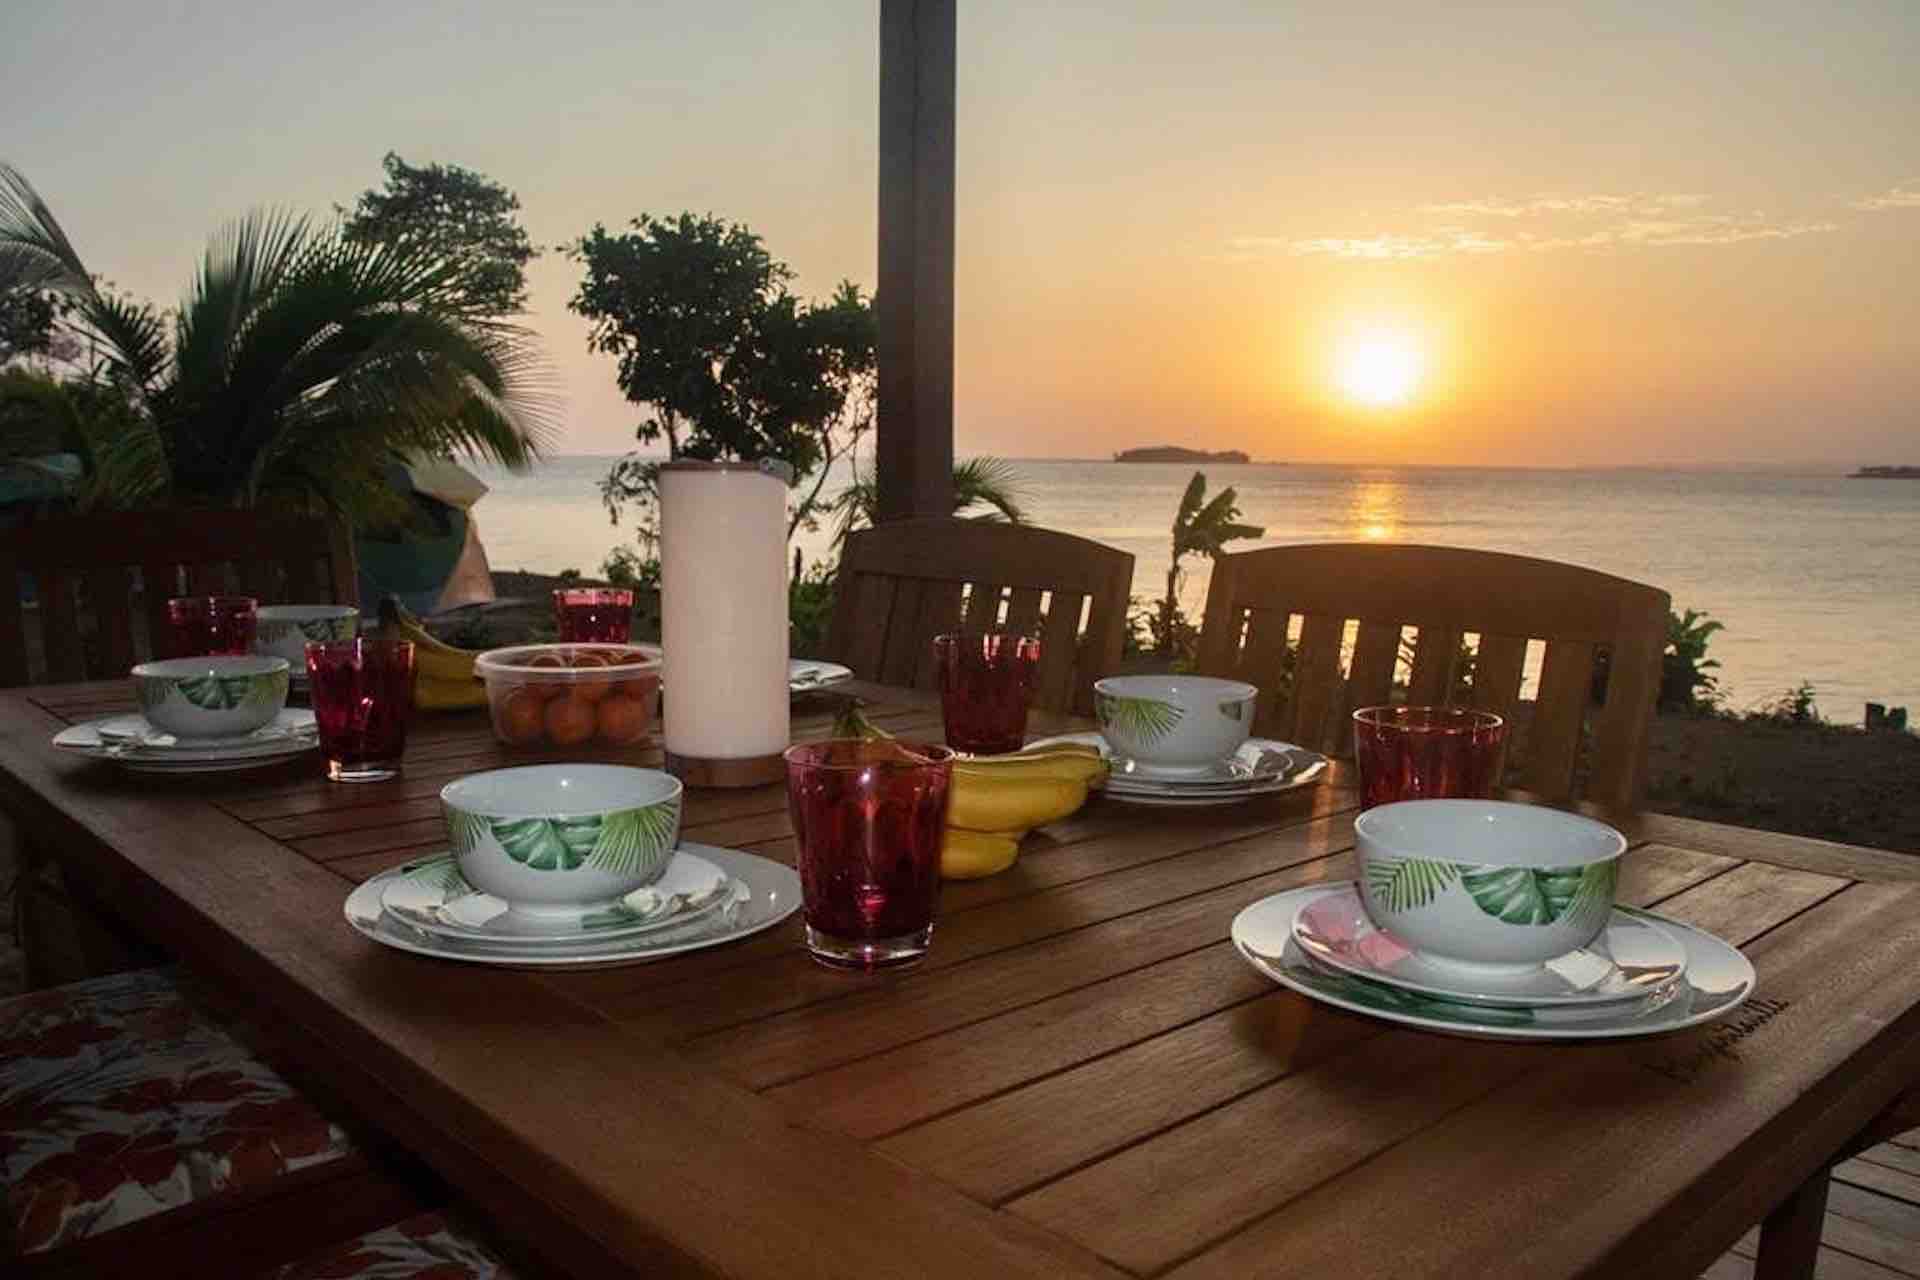 Sonny Island Resort Panama restaurant at sunset